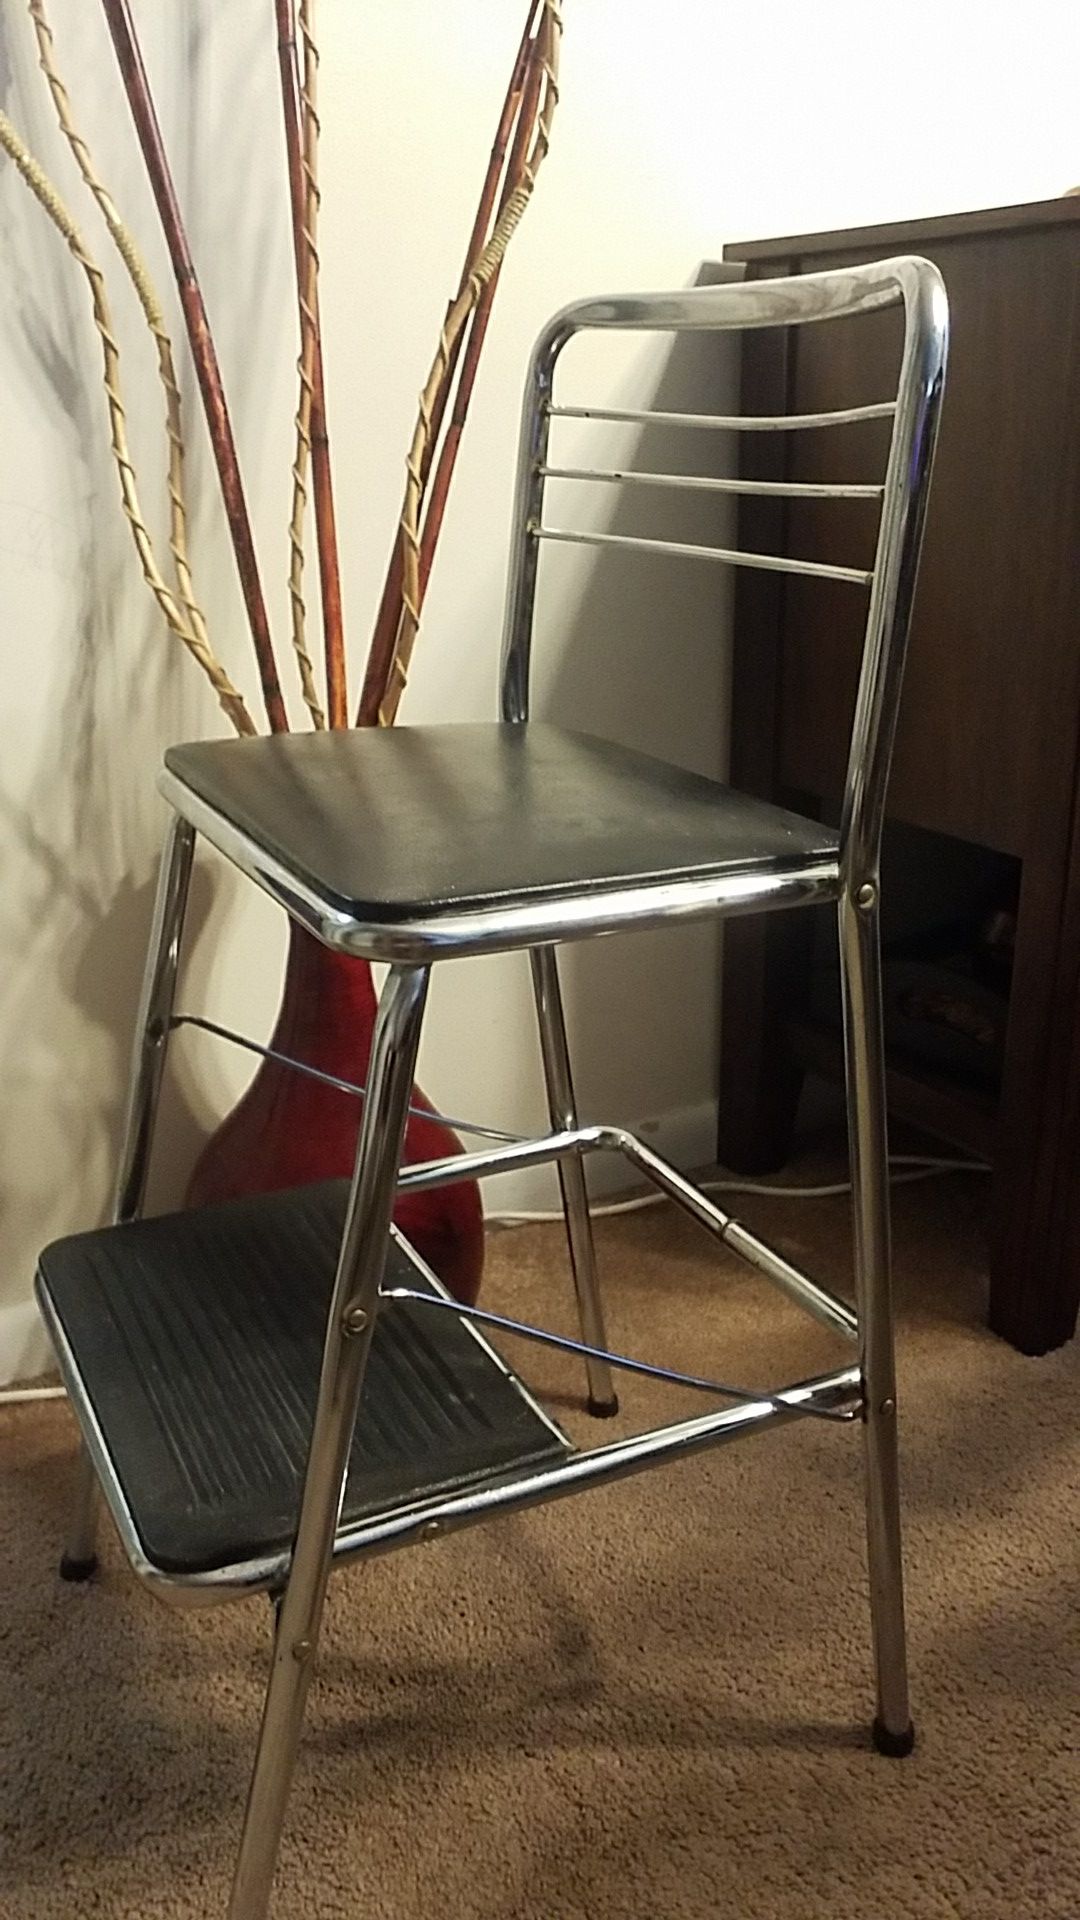 Foldable(old school) step stool